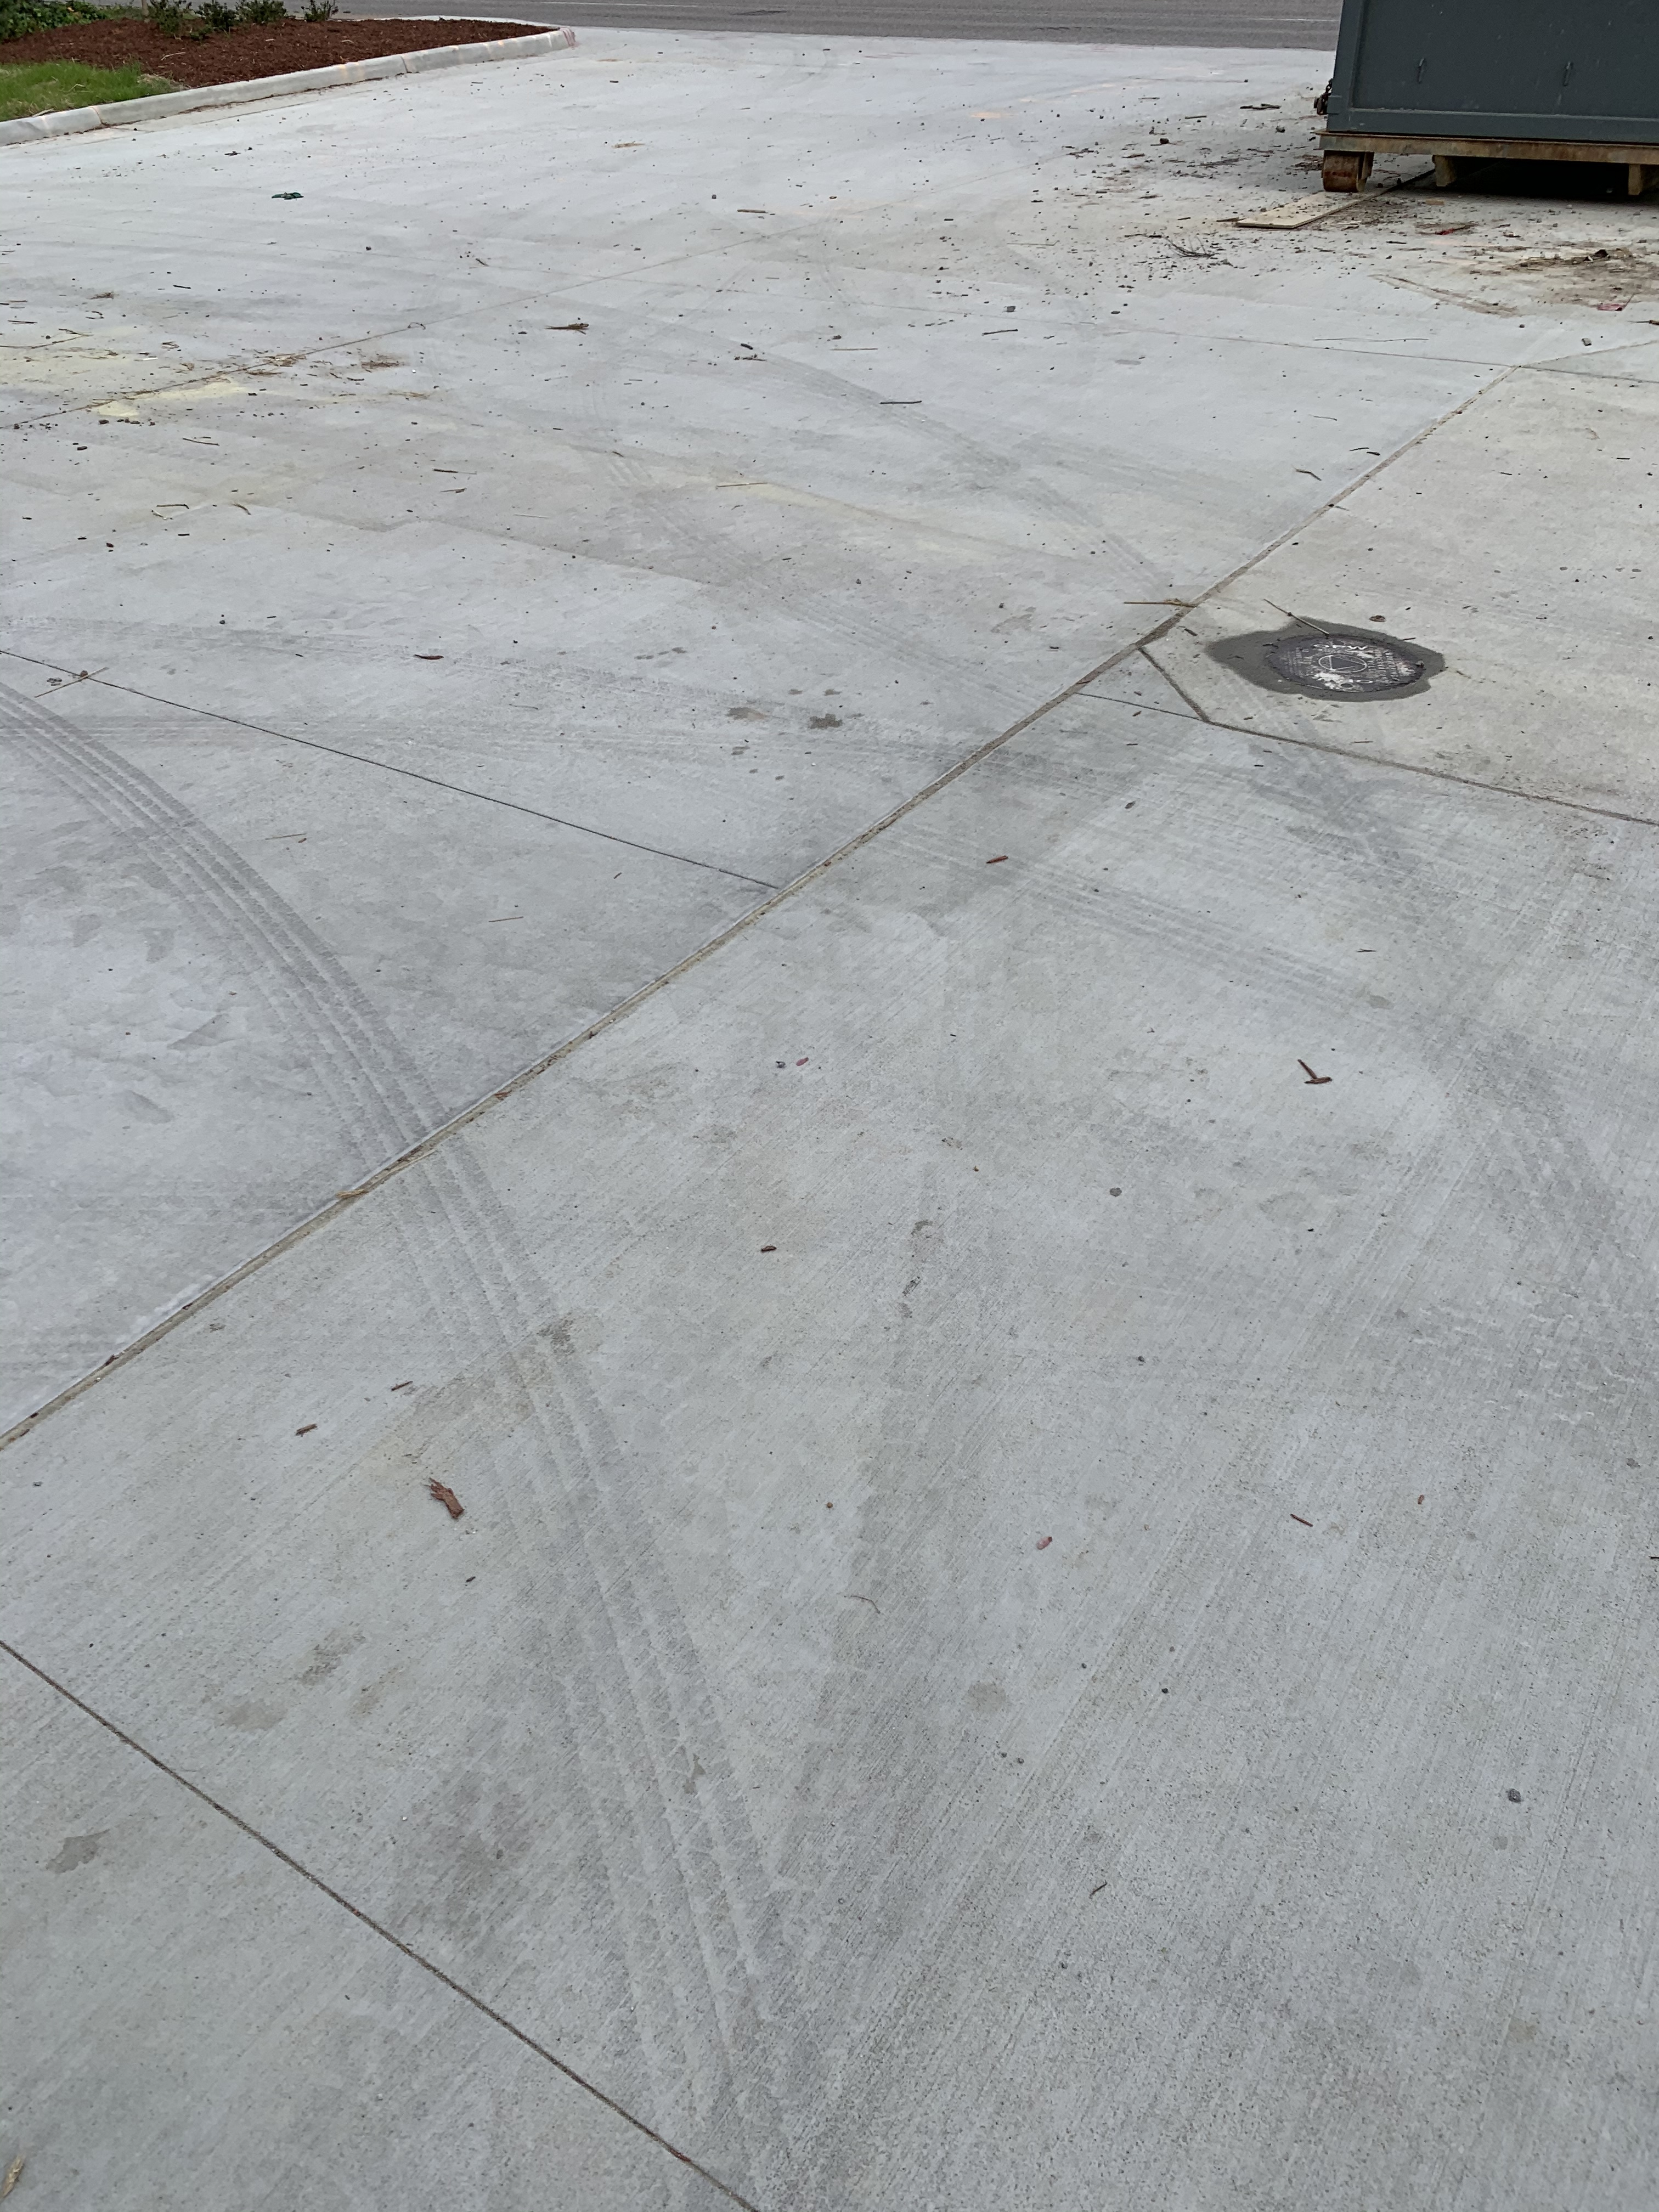 Permanent concrete tire shine marks : r/mildlyinfuriating